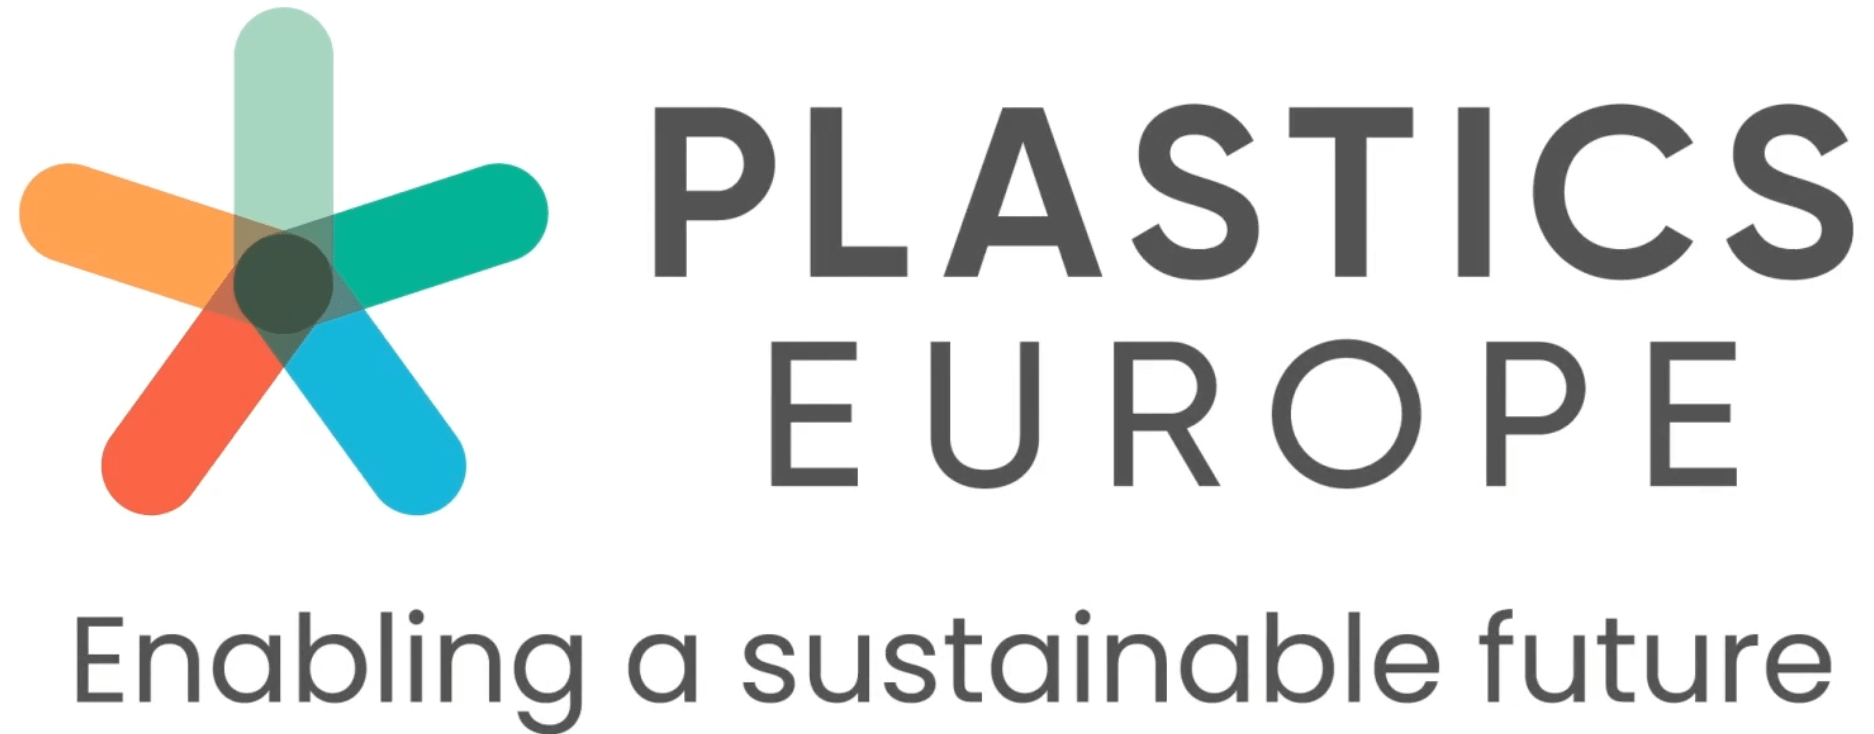 Plastics_Europe